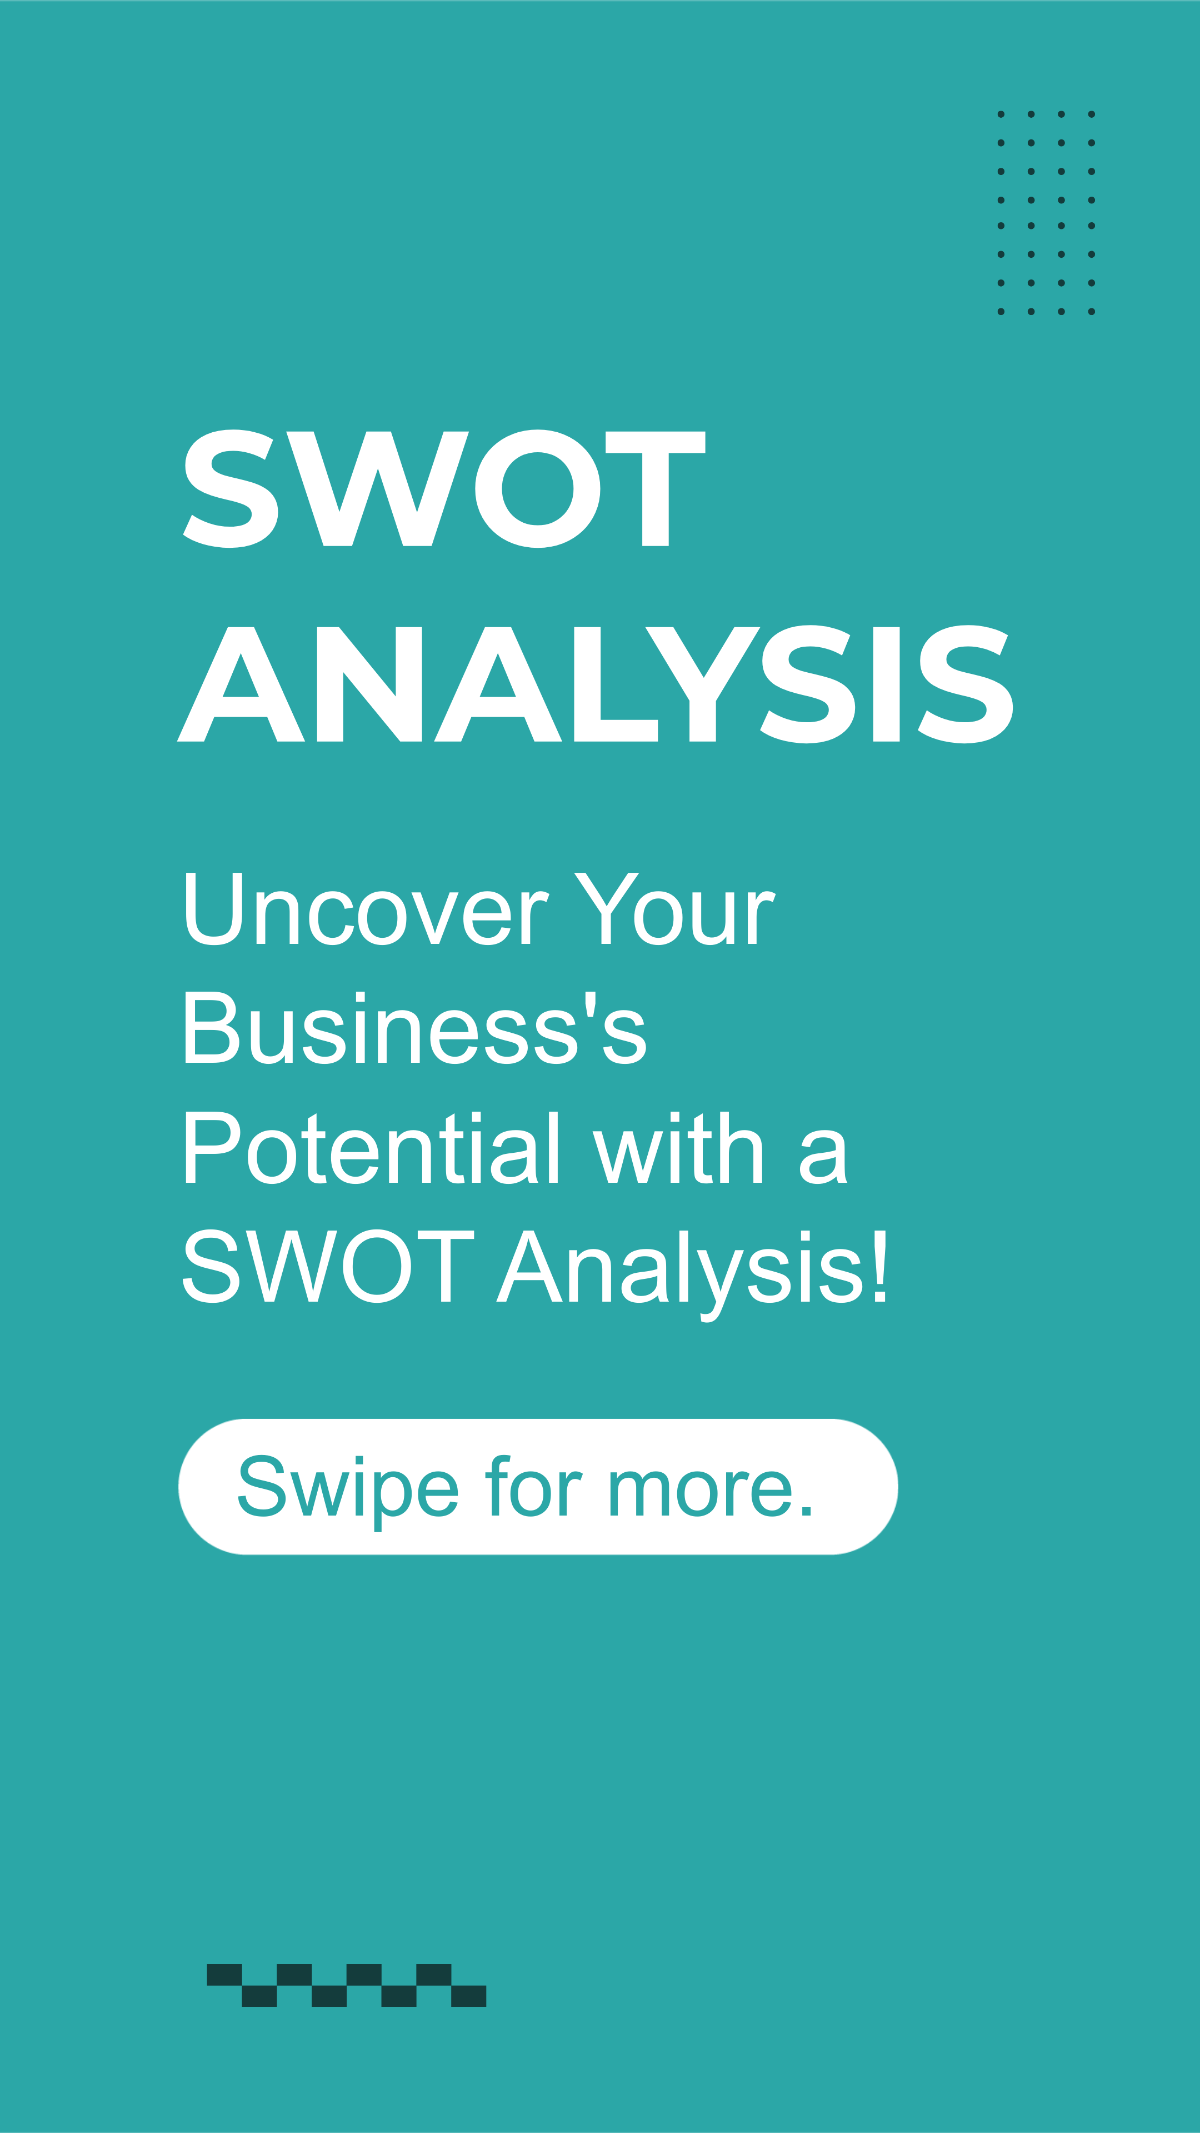 SWOT Analysis Carousel Instagram Post